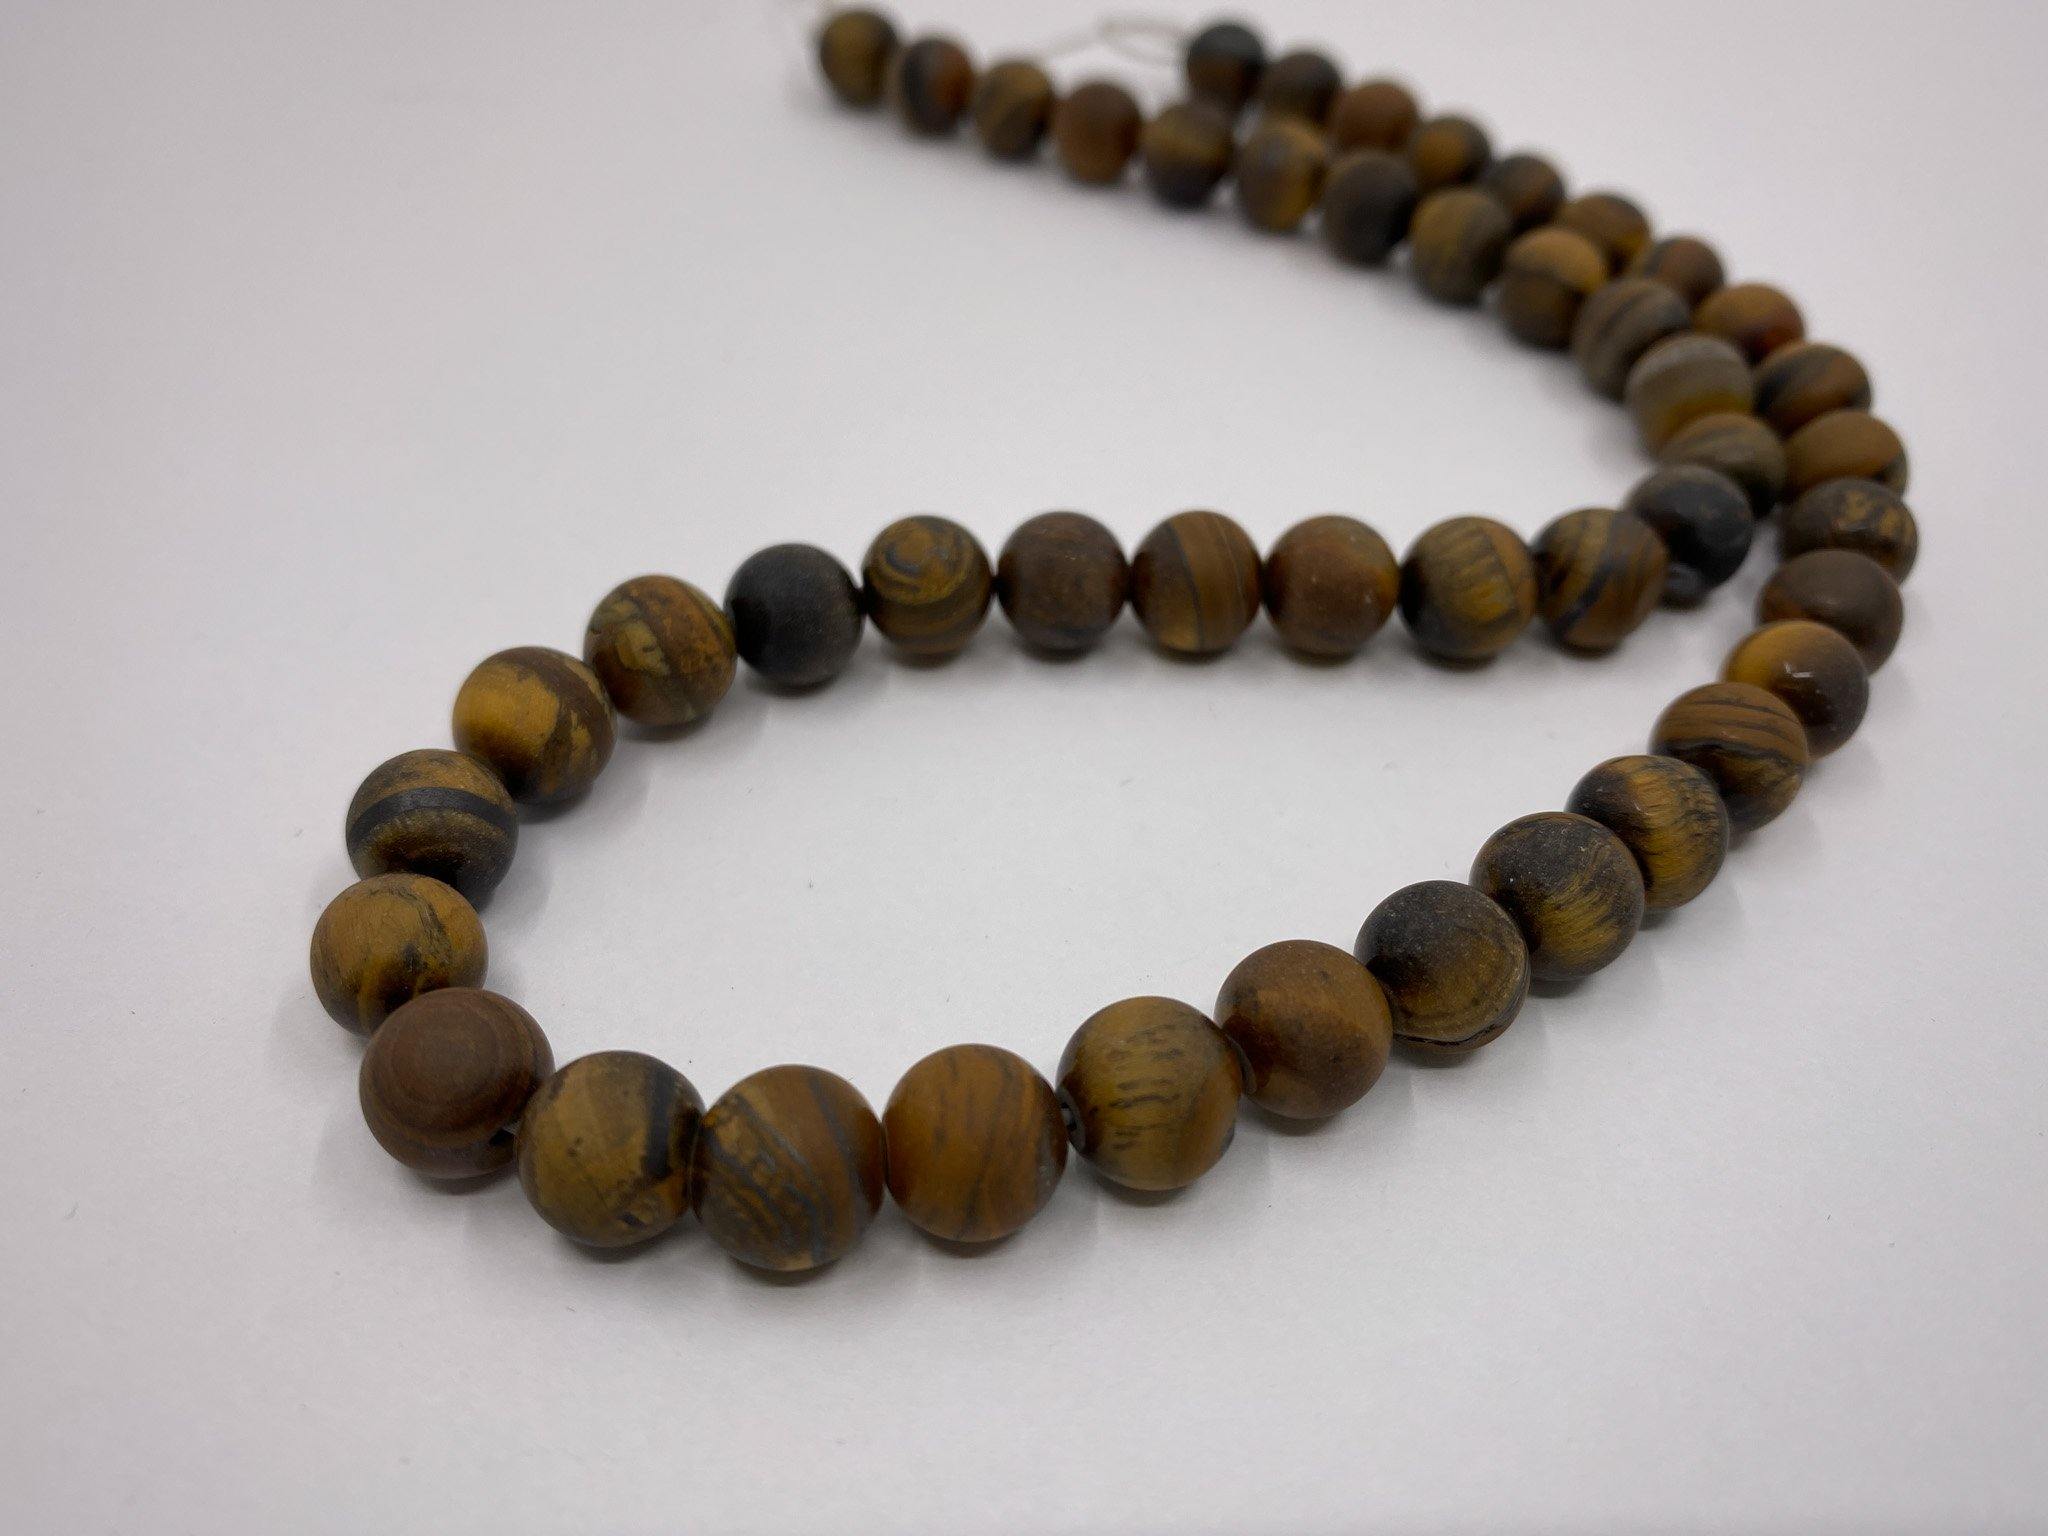 Naturstein Perlen Quarz (Achat, Tigerauge) 8 mm - Farbe matt braun - bead&more